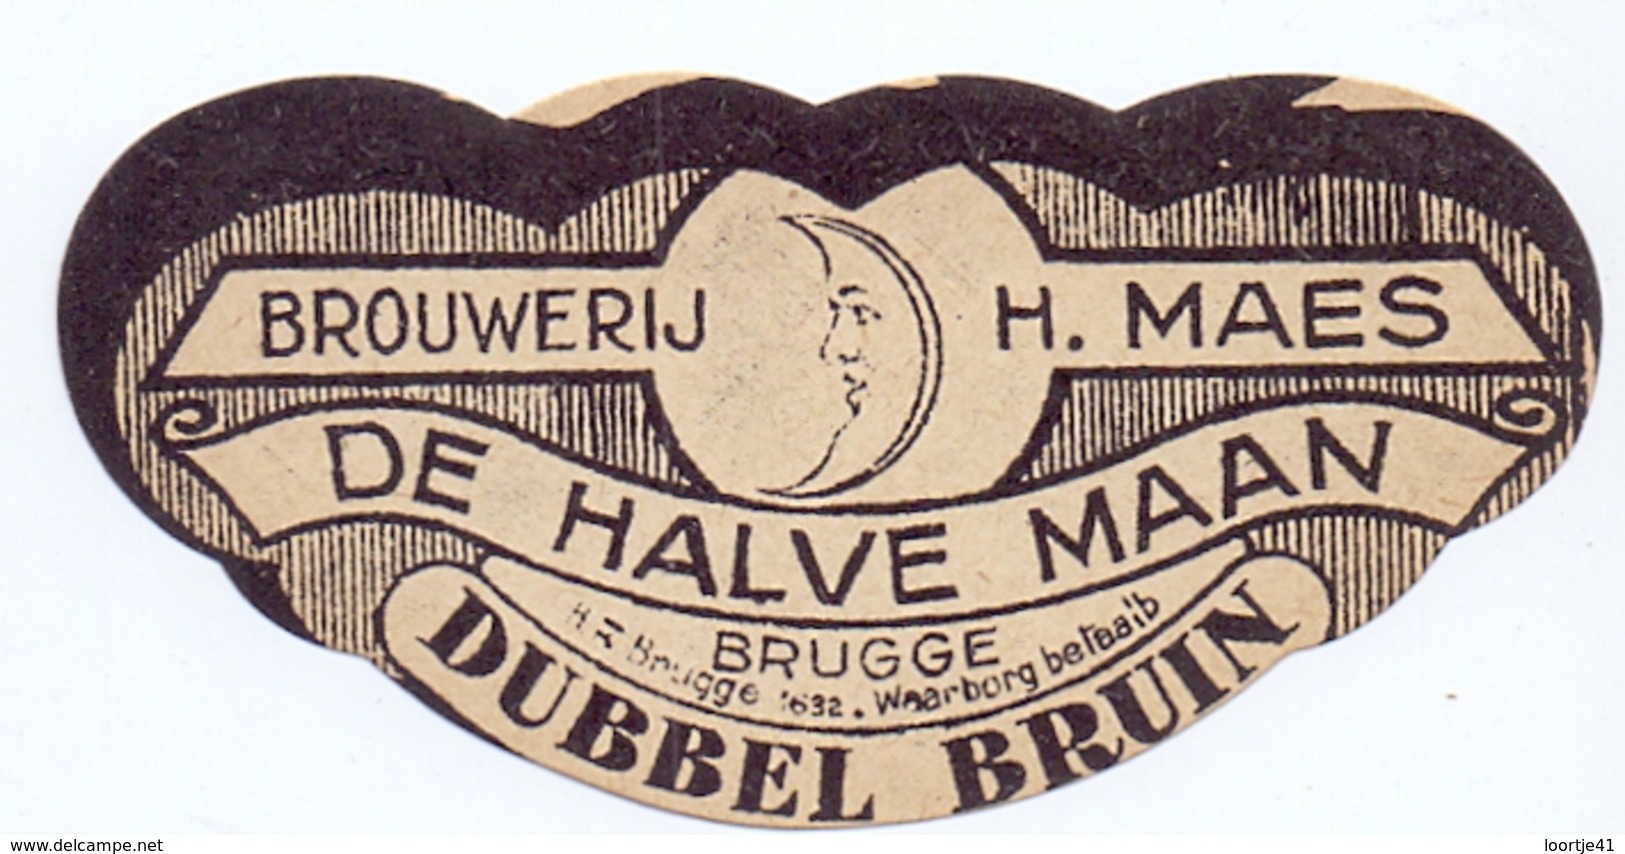 Etiket Etiquette - Bier Bière - Dubbel Bruin - Brouwerij H. Maes - De Halve Maan - Brugge - Bière